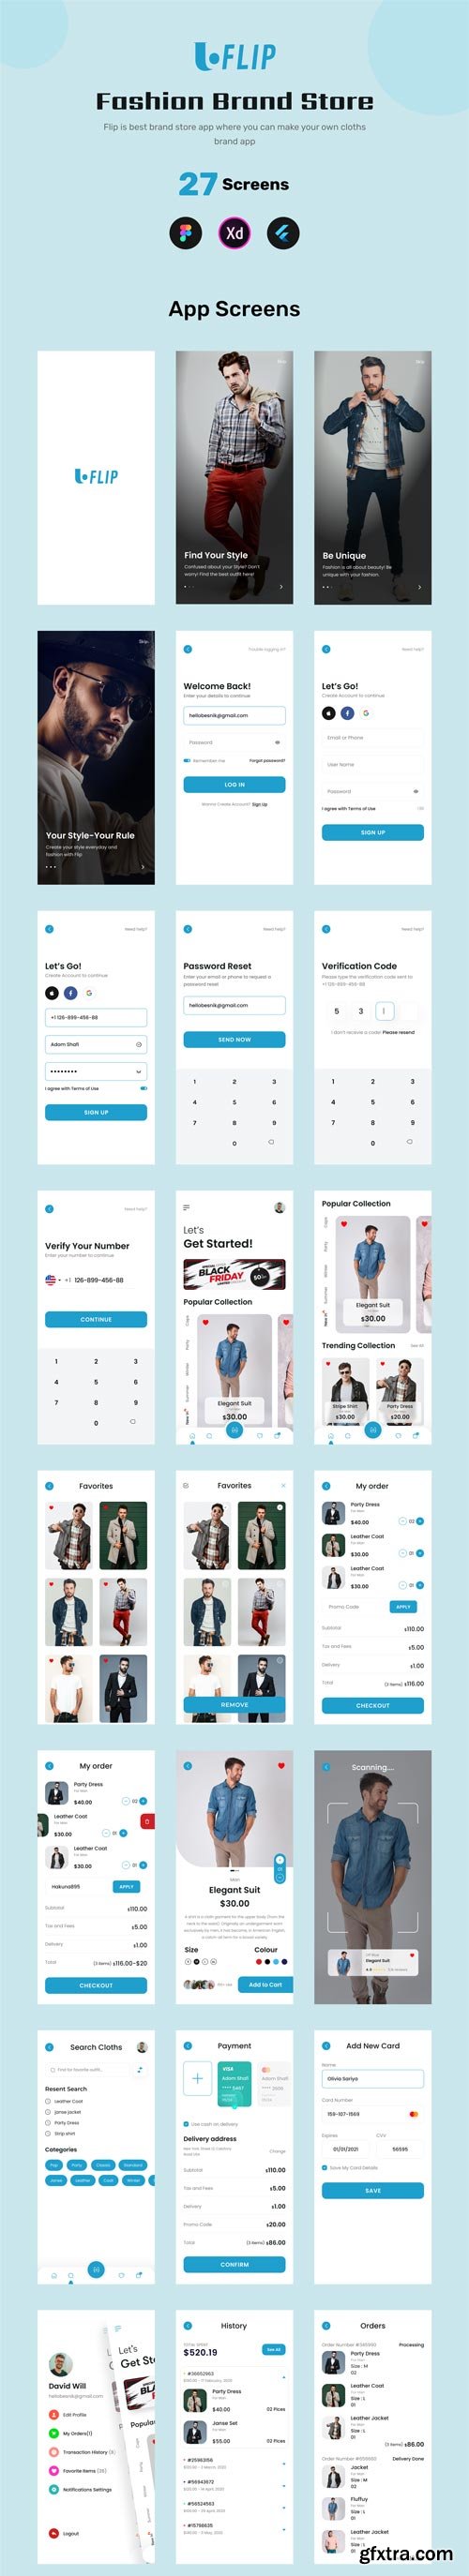 UiHut - Flip Fashion Brand App UI Kit - 9824